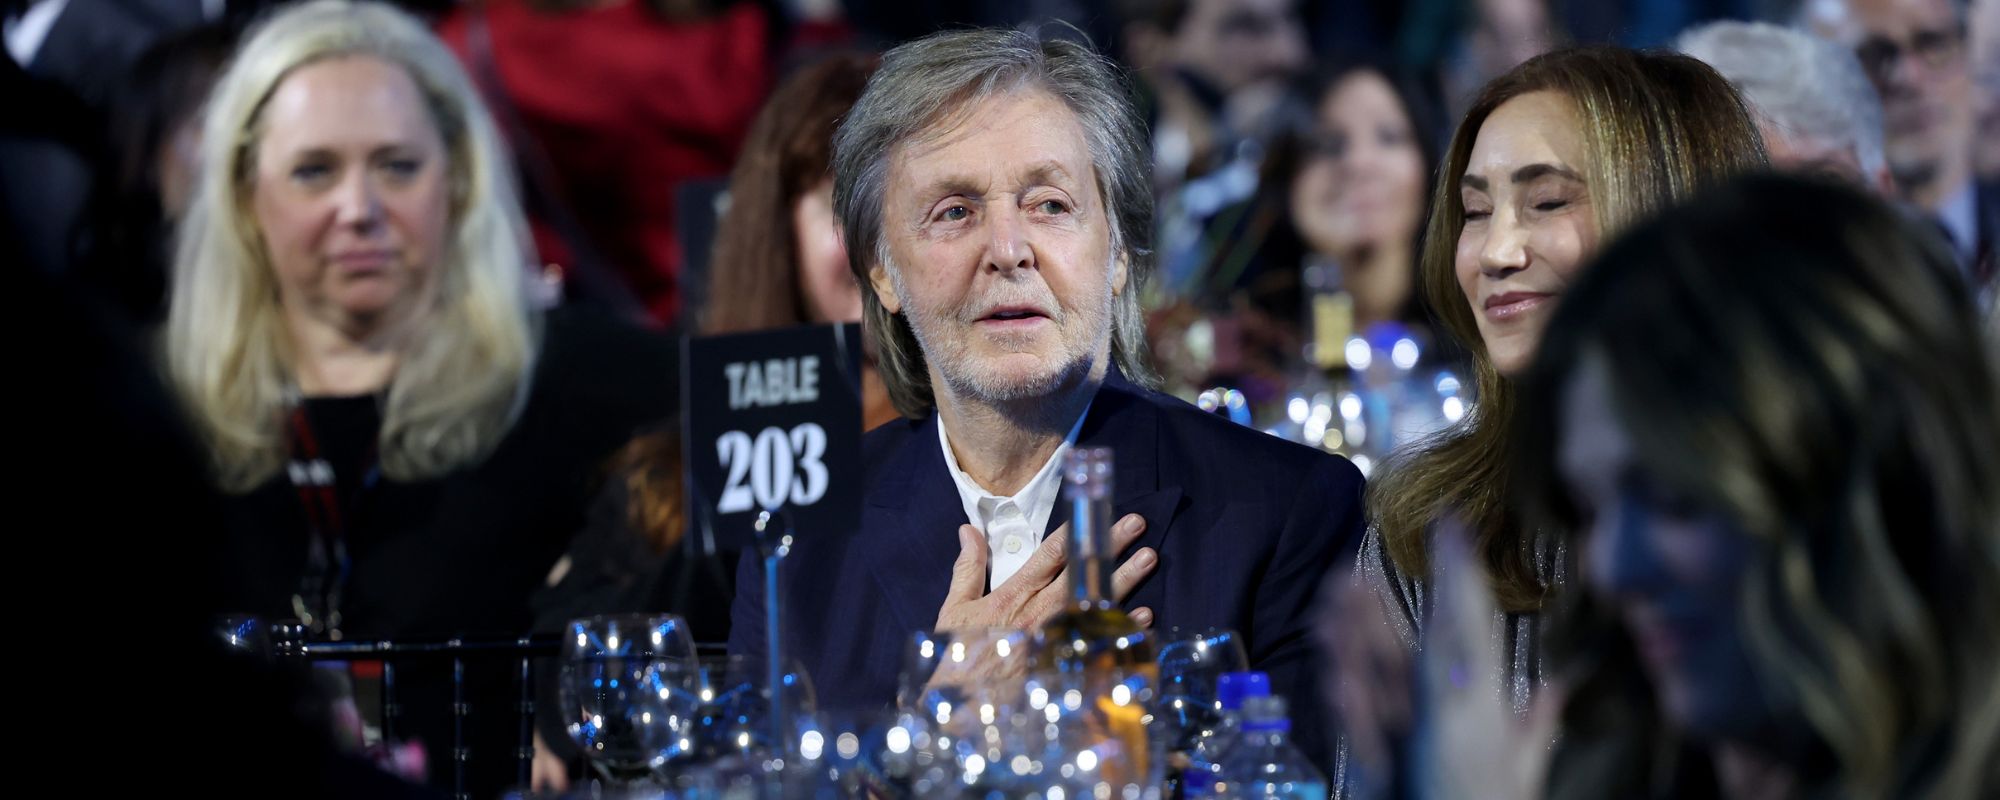 L’œuvre interdite de Paul McCartney profitera de toute façon à War Child